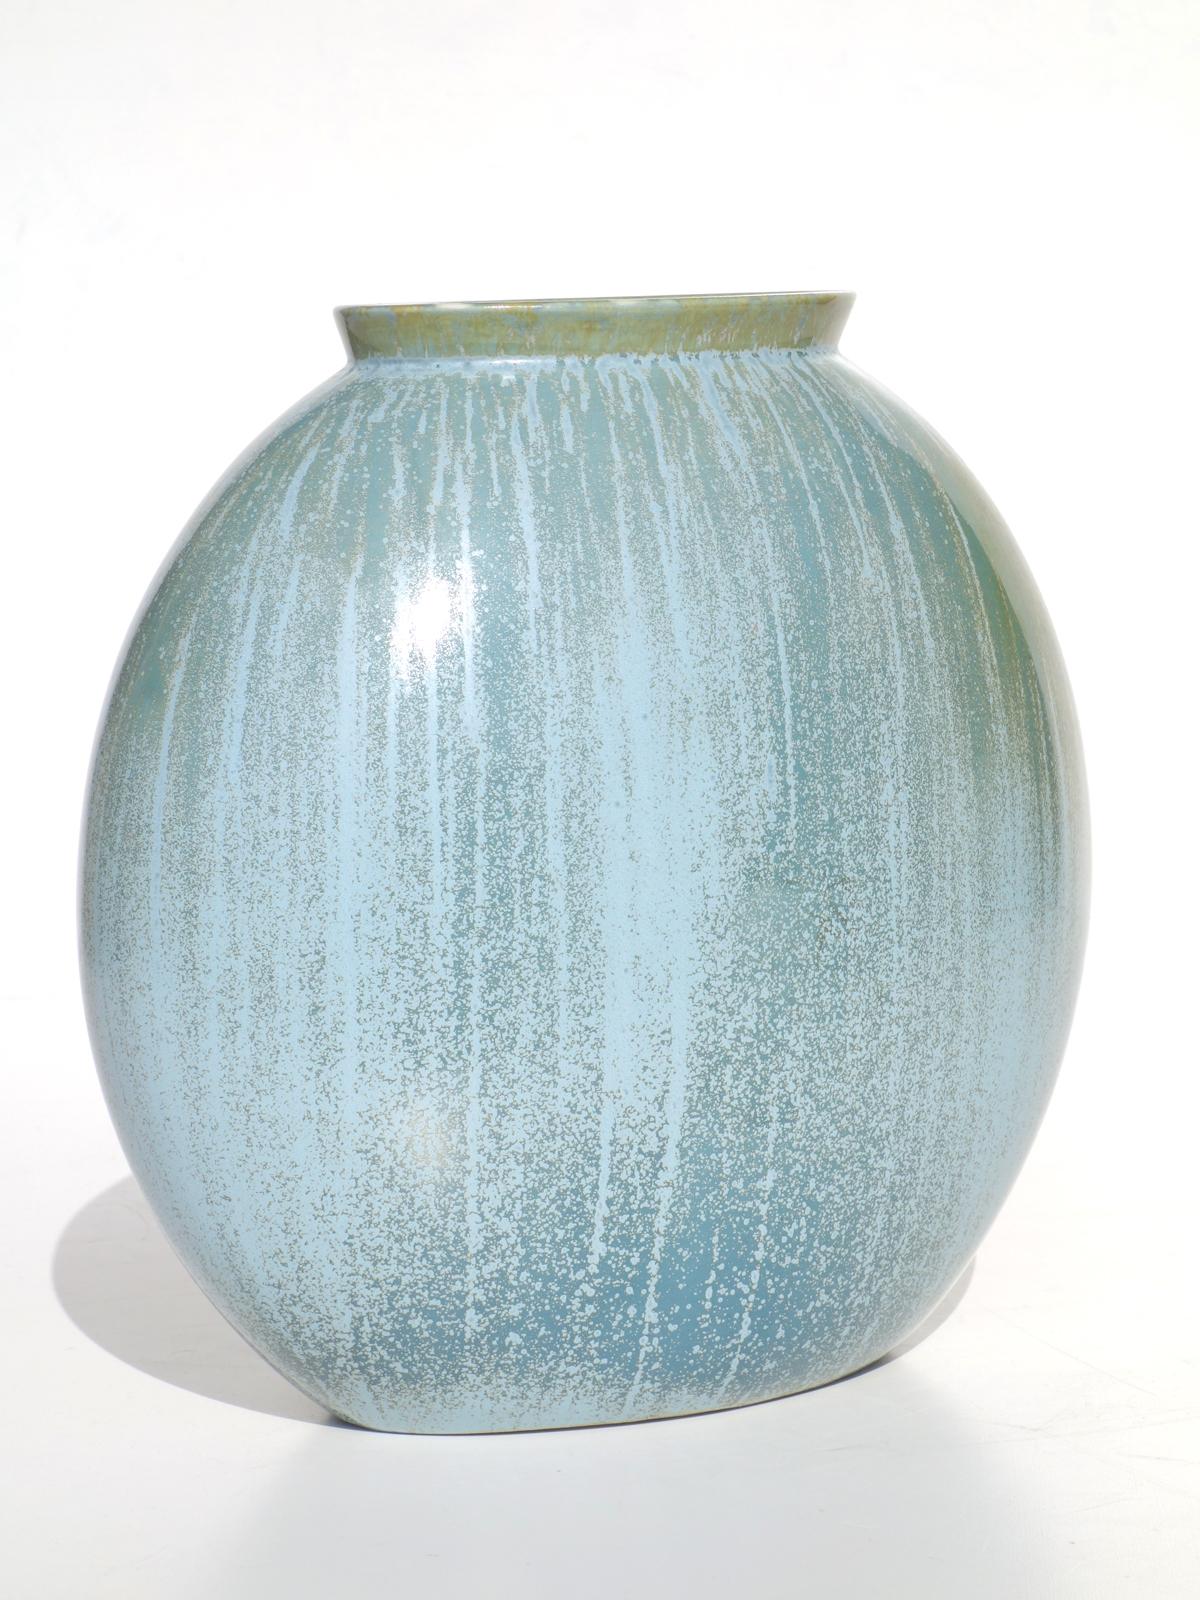 Guido andlovitz Vase
mod. 1316/3
SCI Laveno 1930-1940
italy

Glazed Ceramic
Excellent Condiction.